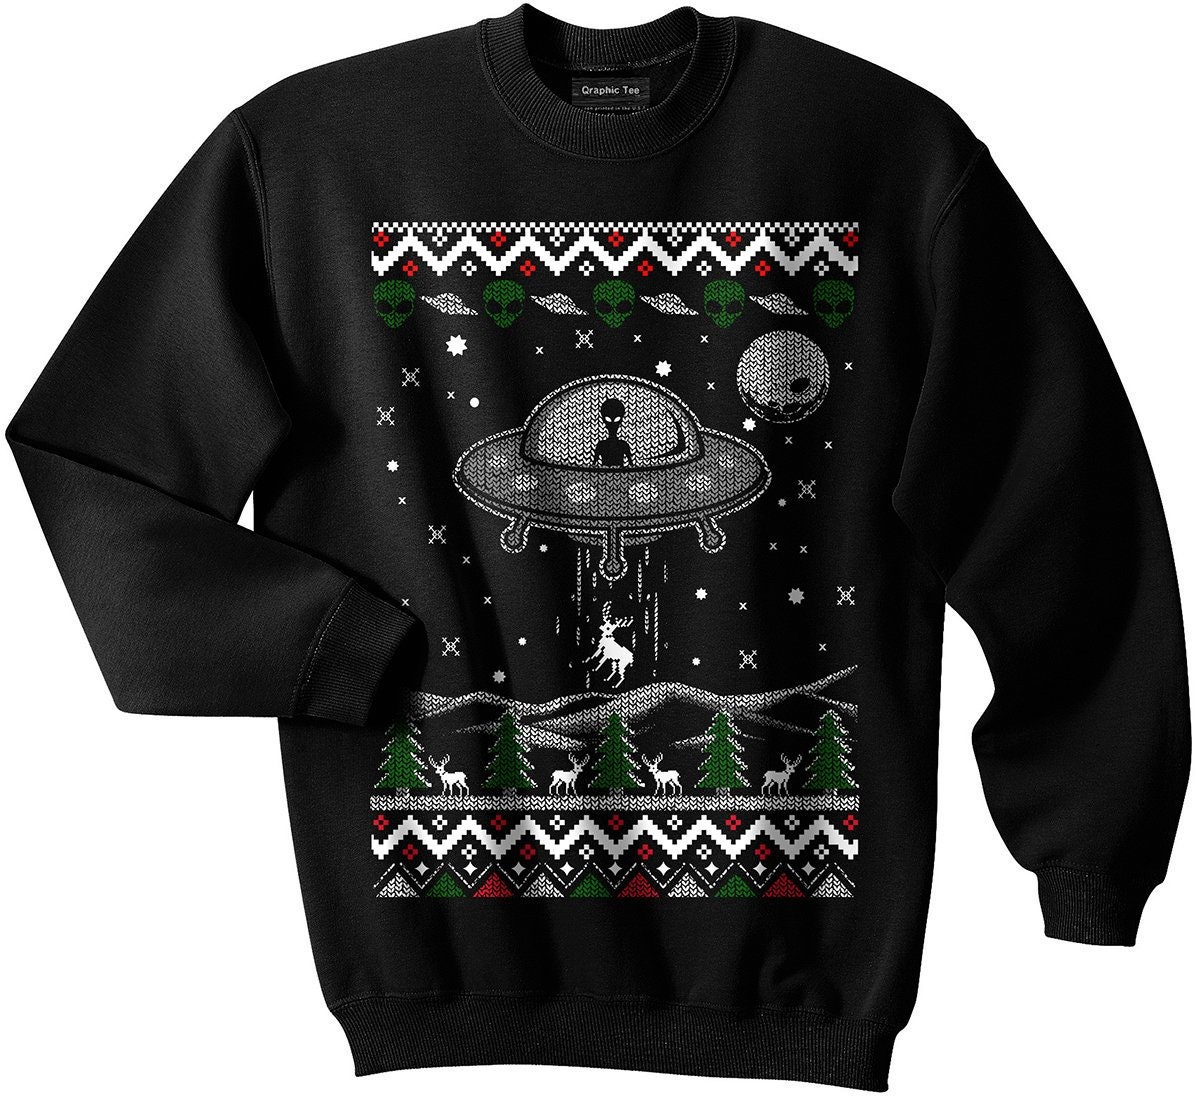 Alien Beam Ugly Christmas Sweater Green Crew Neck Sweatshirt 